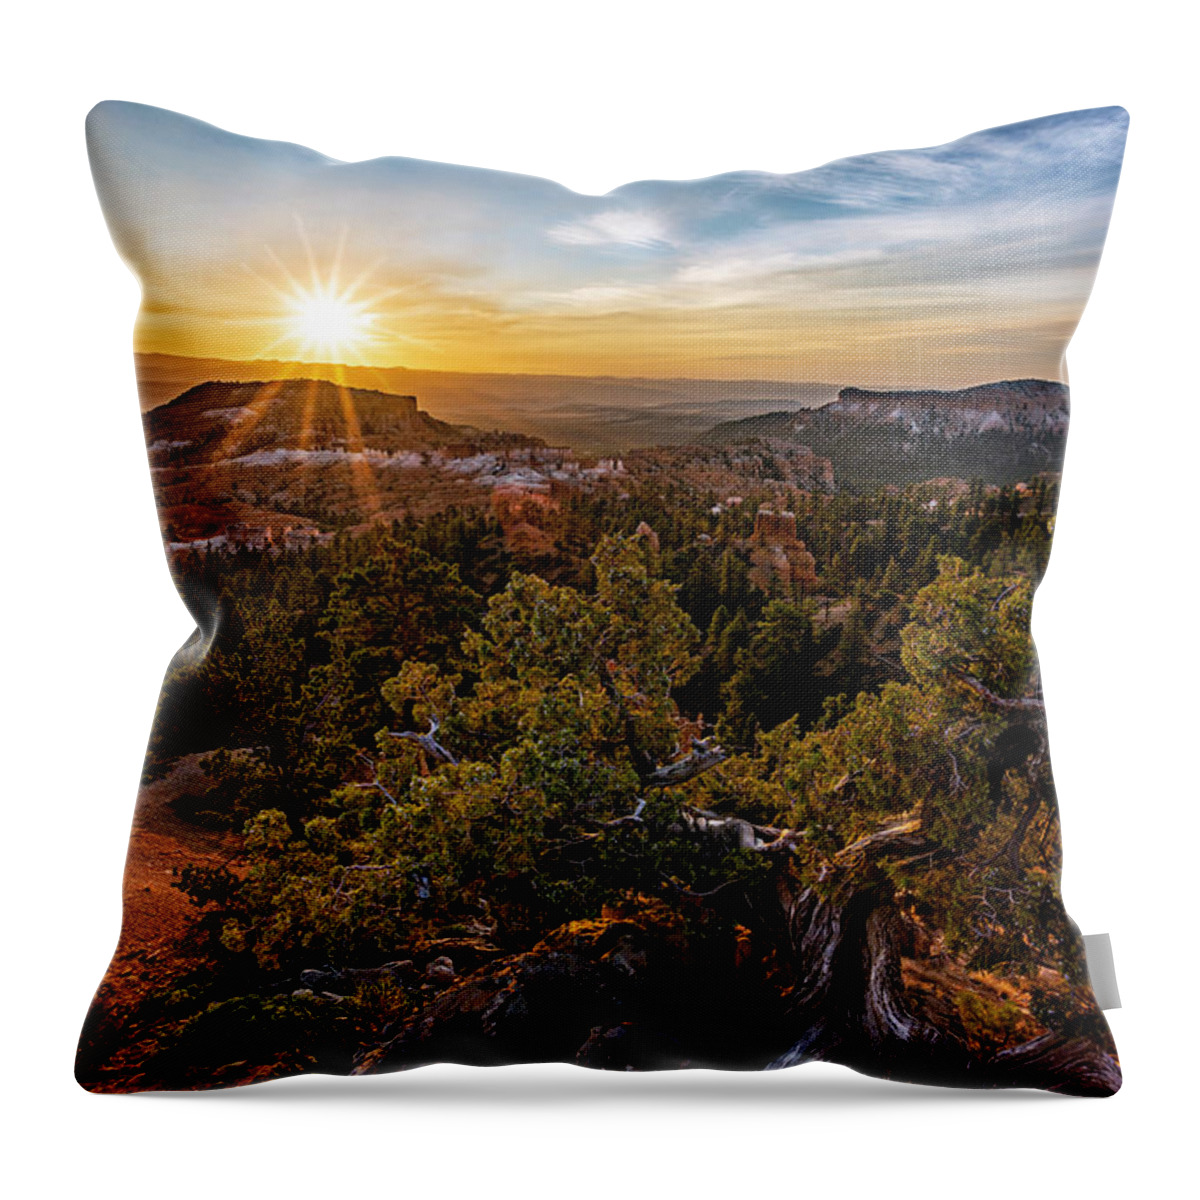 2020 Utah Trip Throw Pillow featuring the photograph Sunrise Point by Gary Johnson